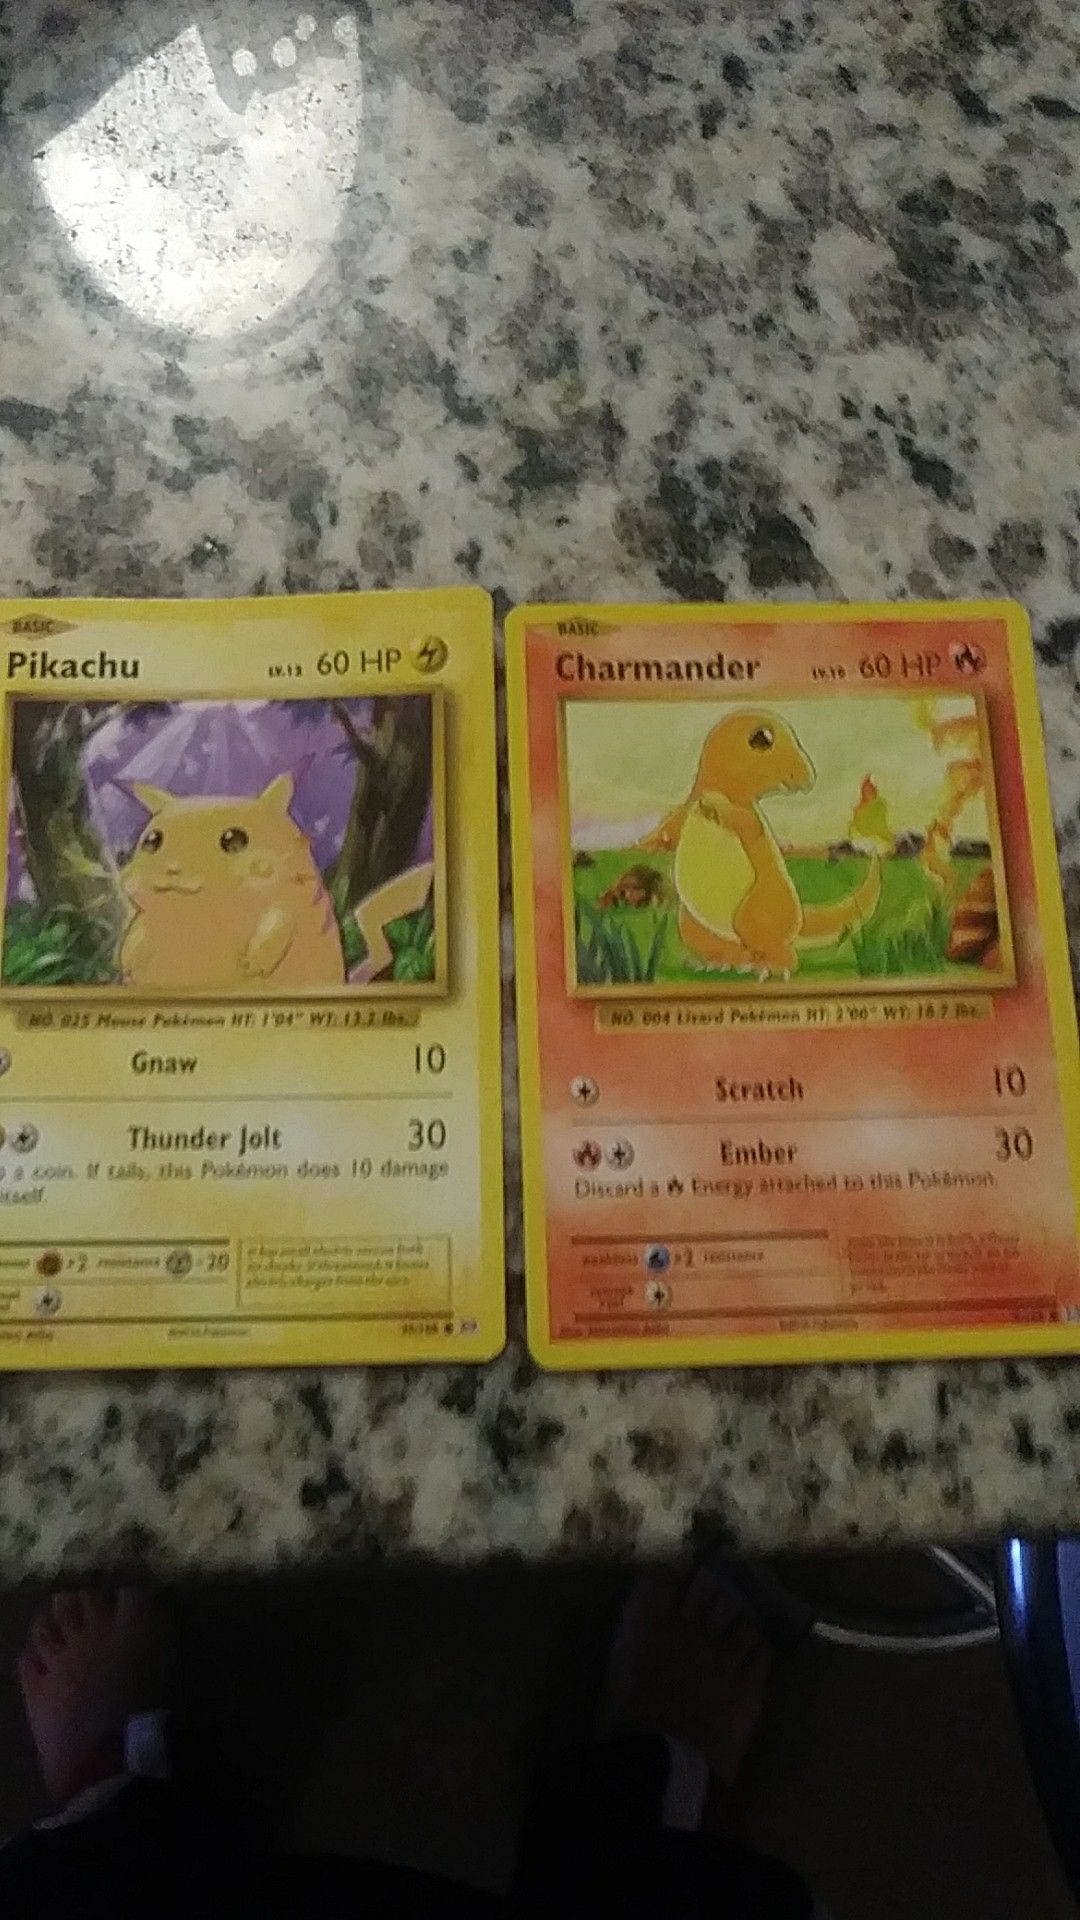 Rare Pokemon cards Charizard and Pikachu